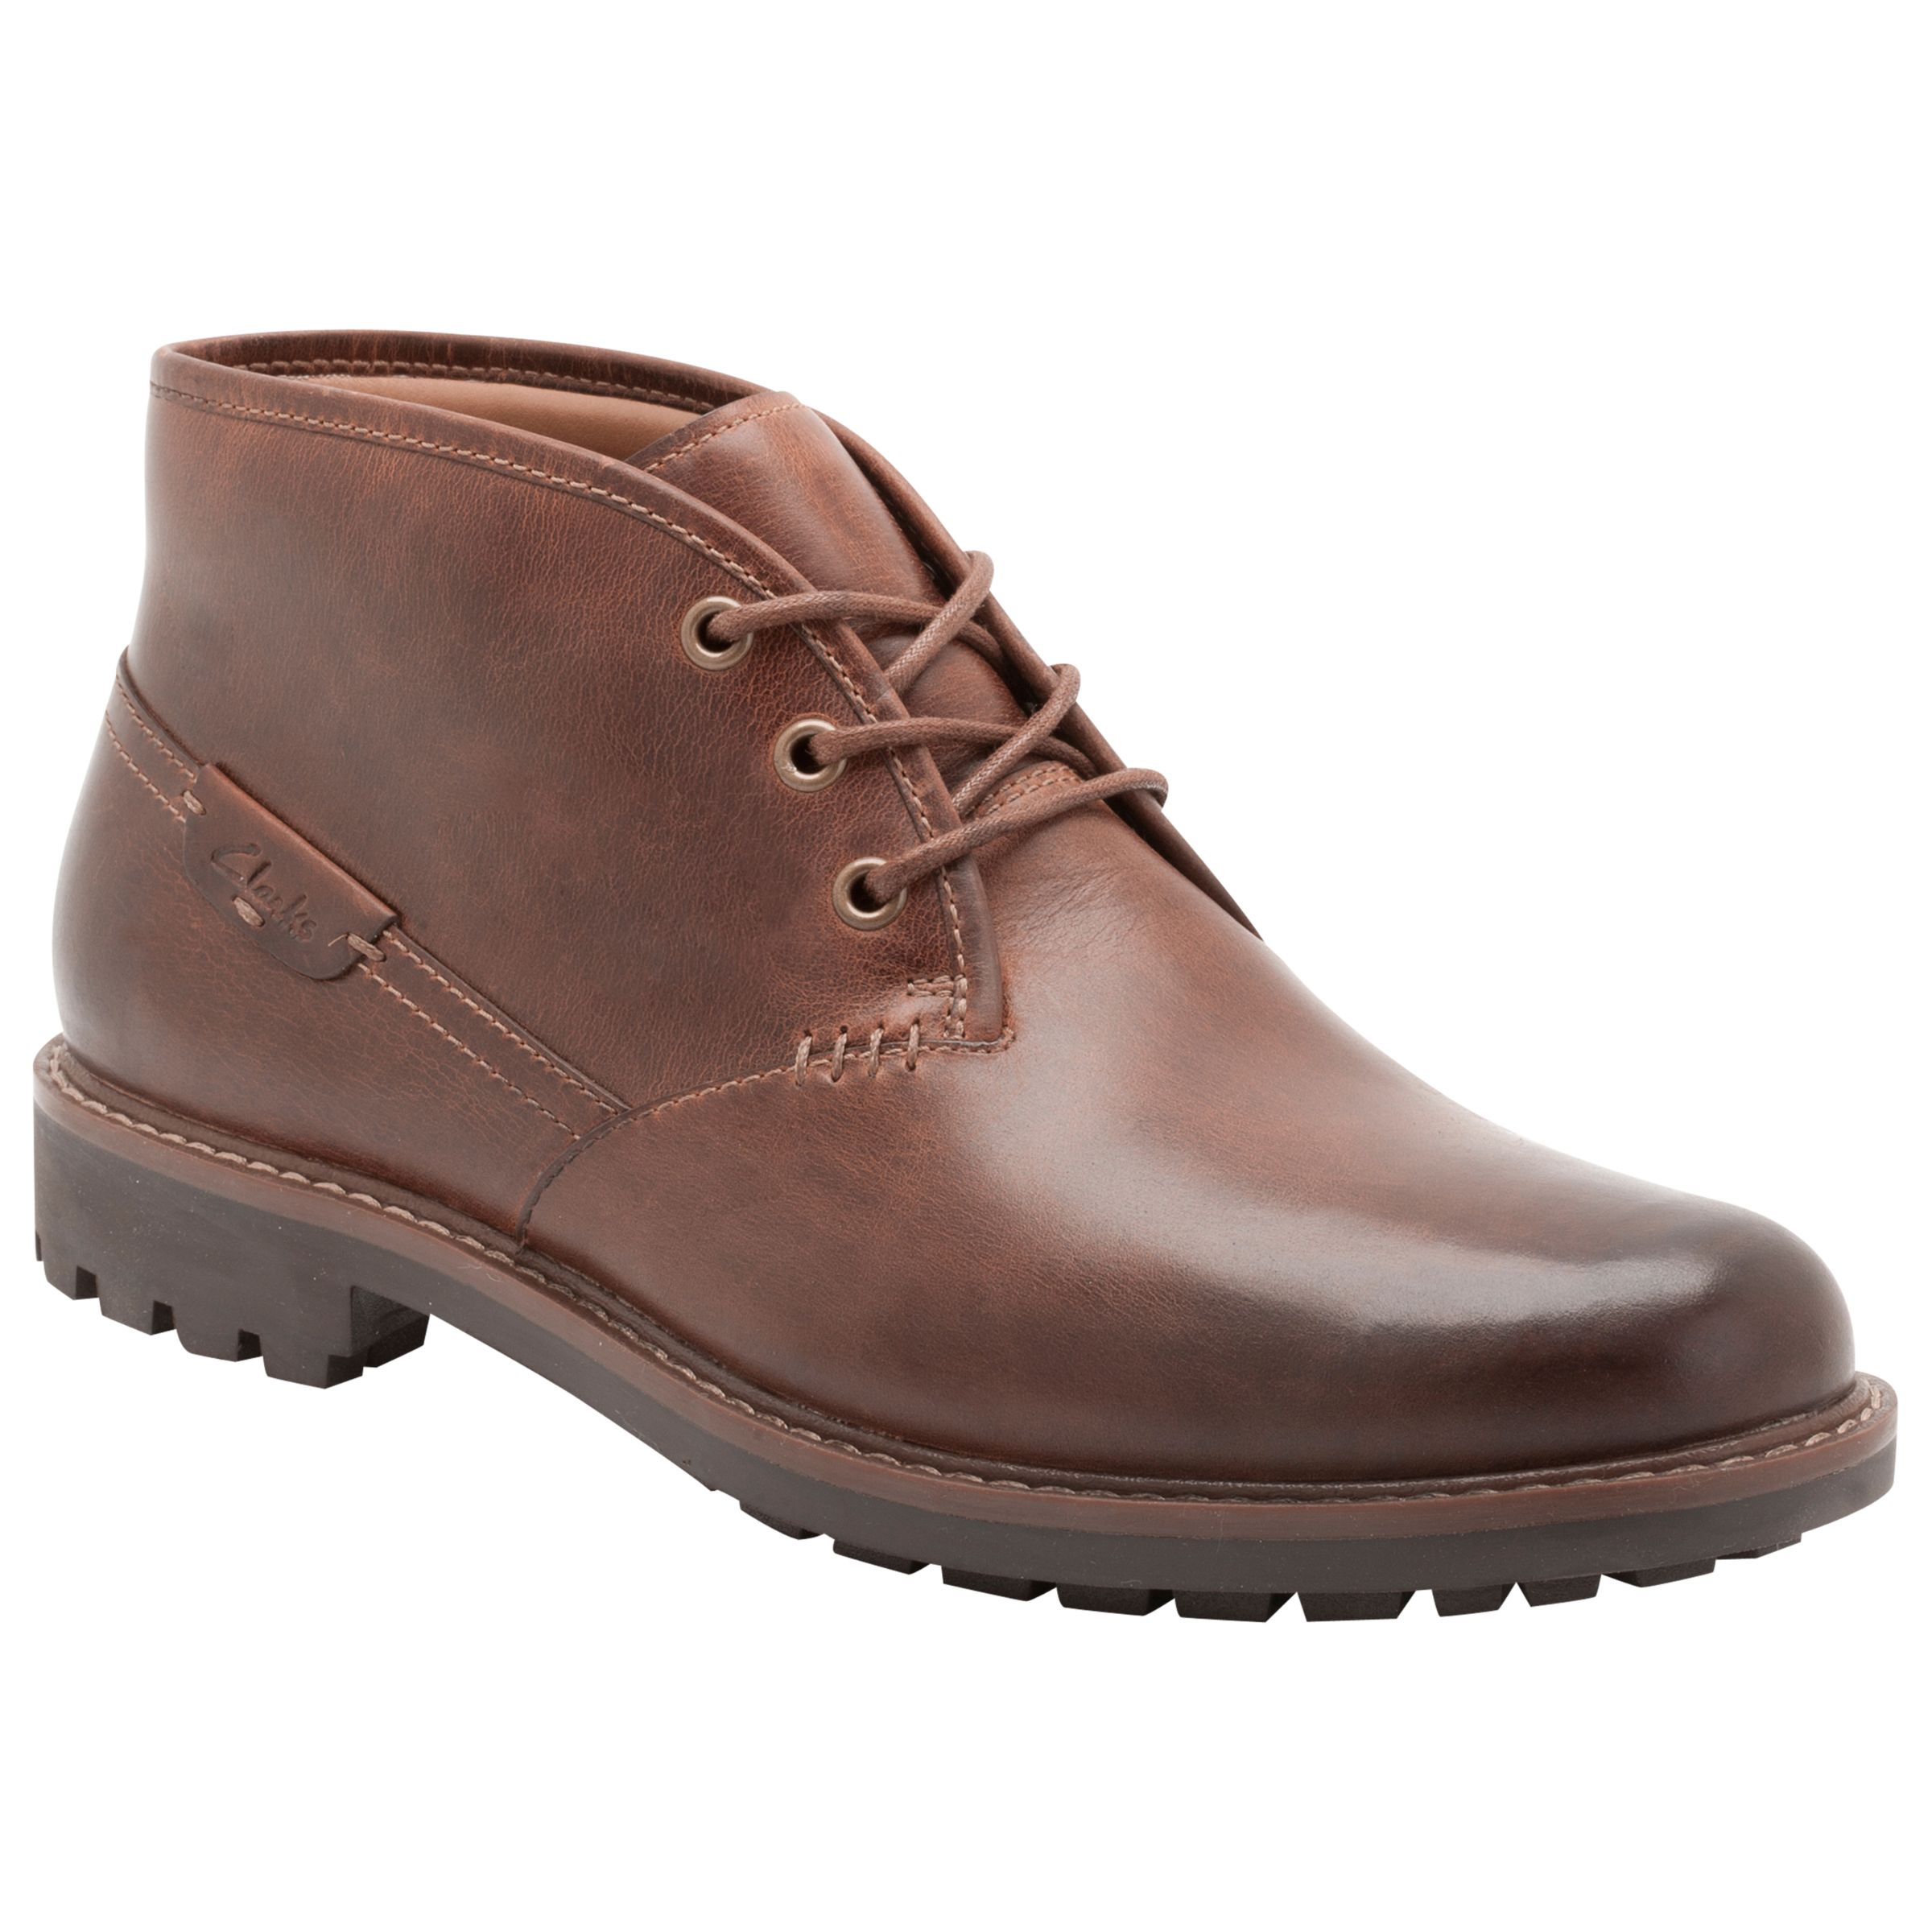 clarks montacute duke leather chukka boots dark brown